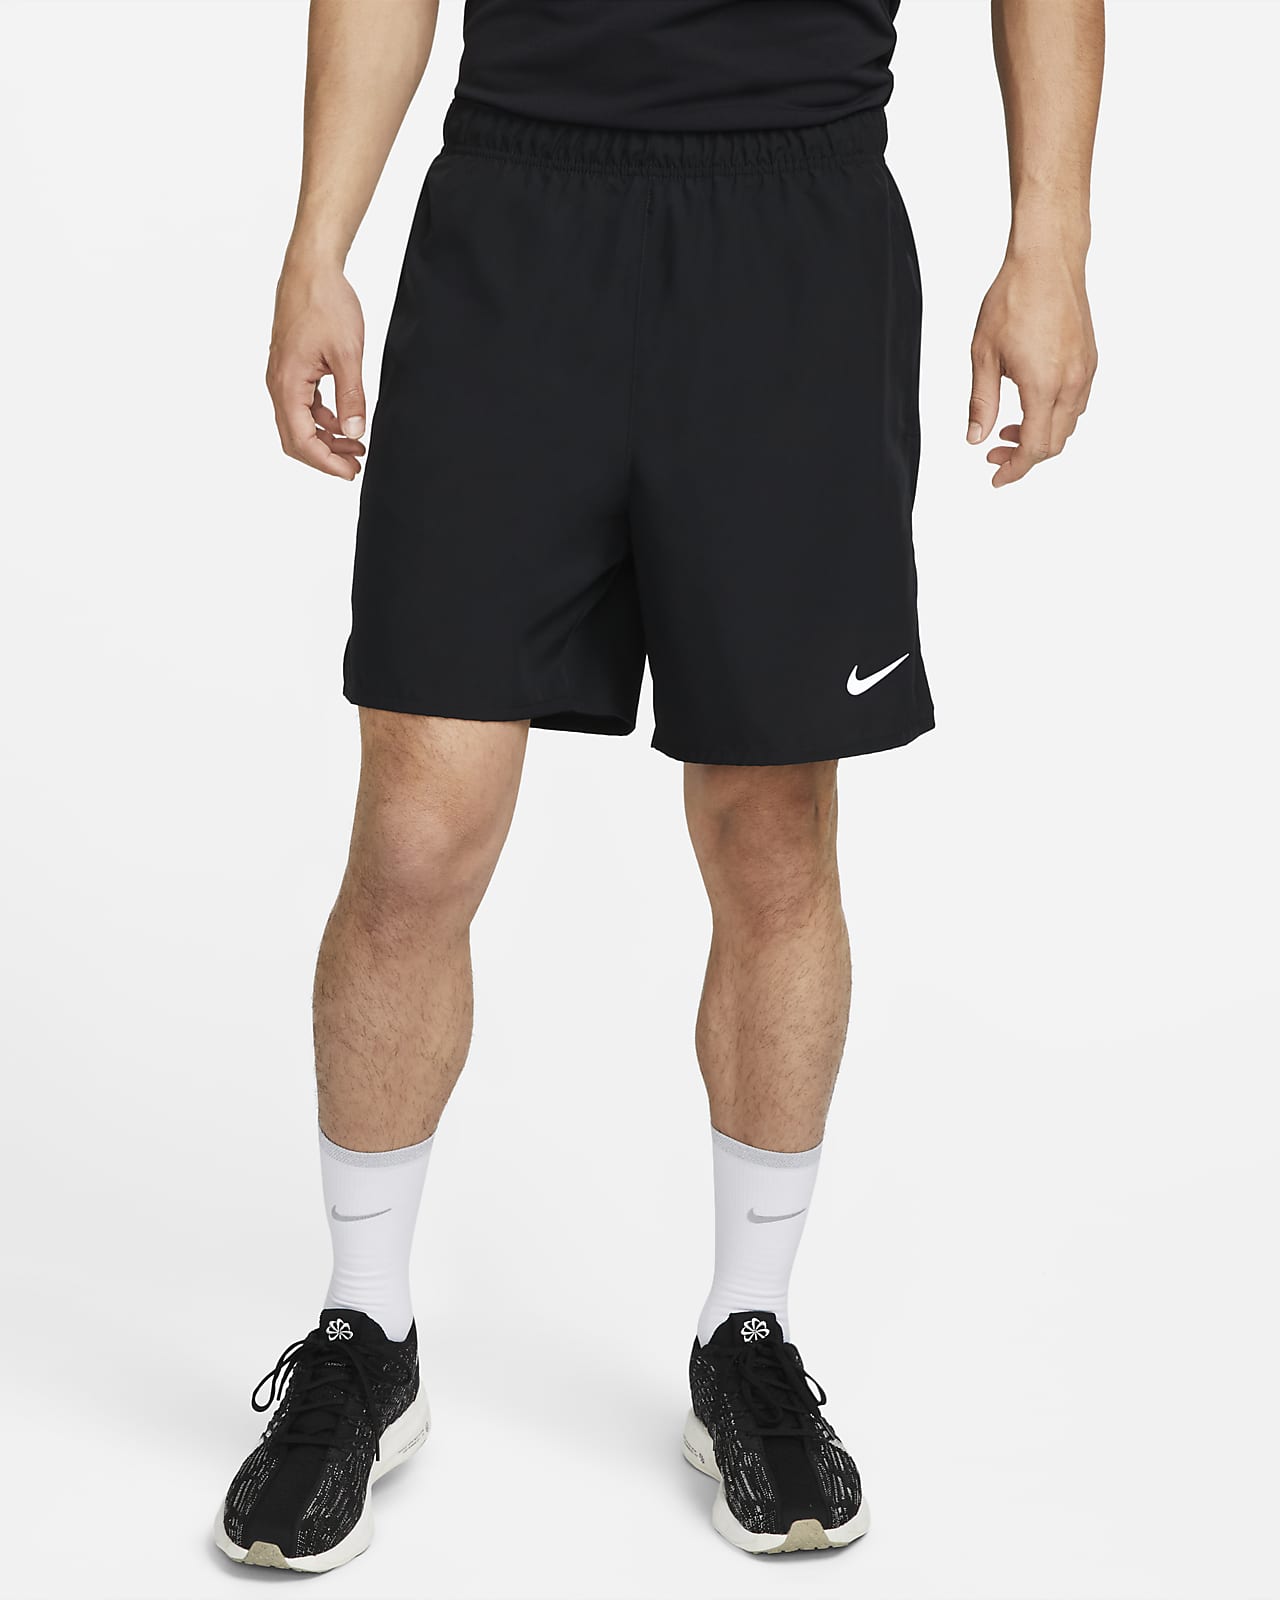 Nike Dri-FIT Challenger Men's 18cm (approx.) Brief-Lined Versatile Shorts